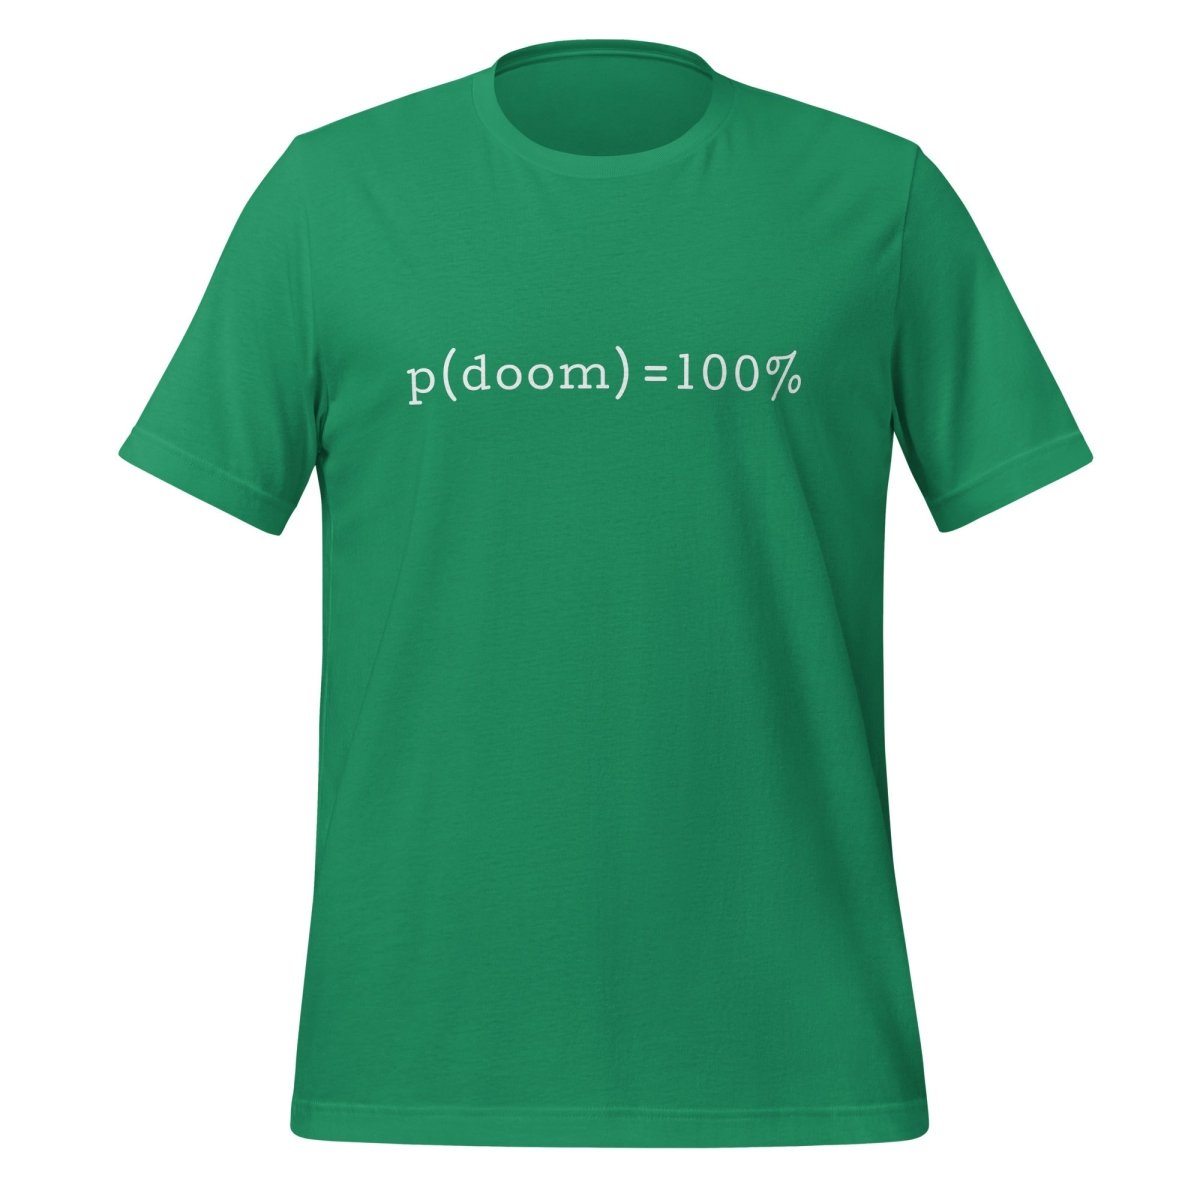 p(doom) = 100% T - Shirt (unisex) - Kelly - AI Store